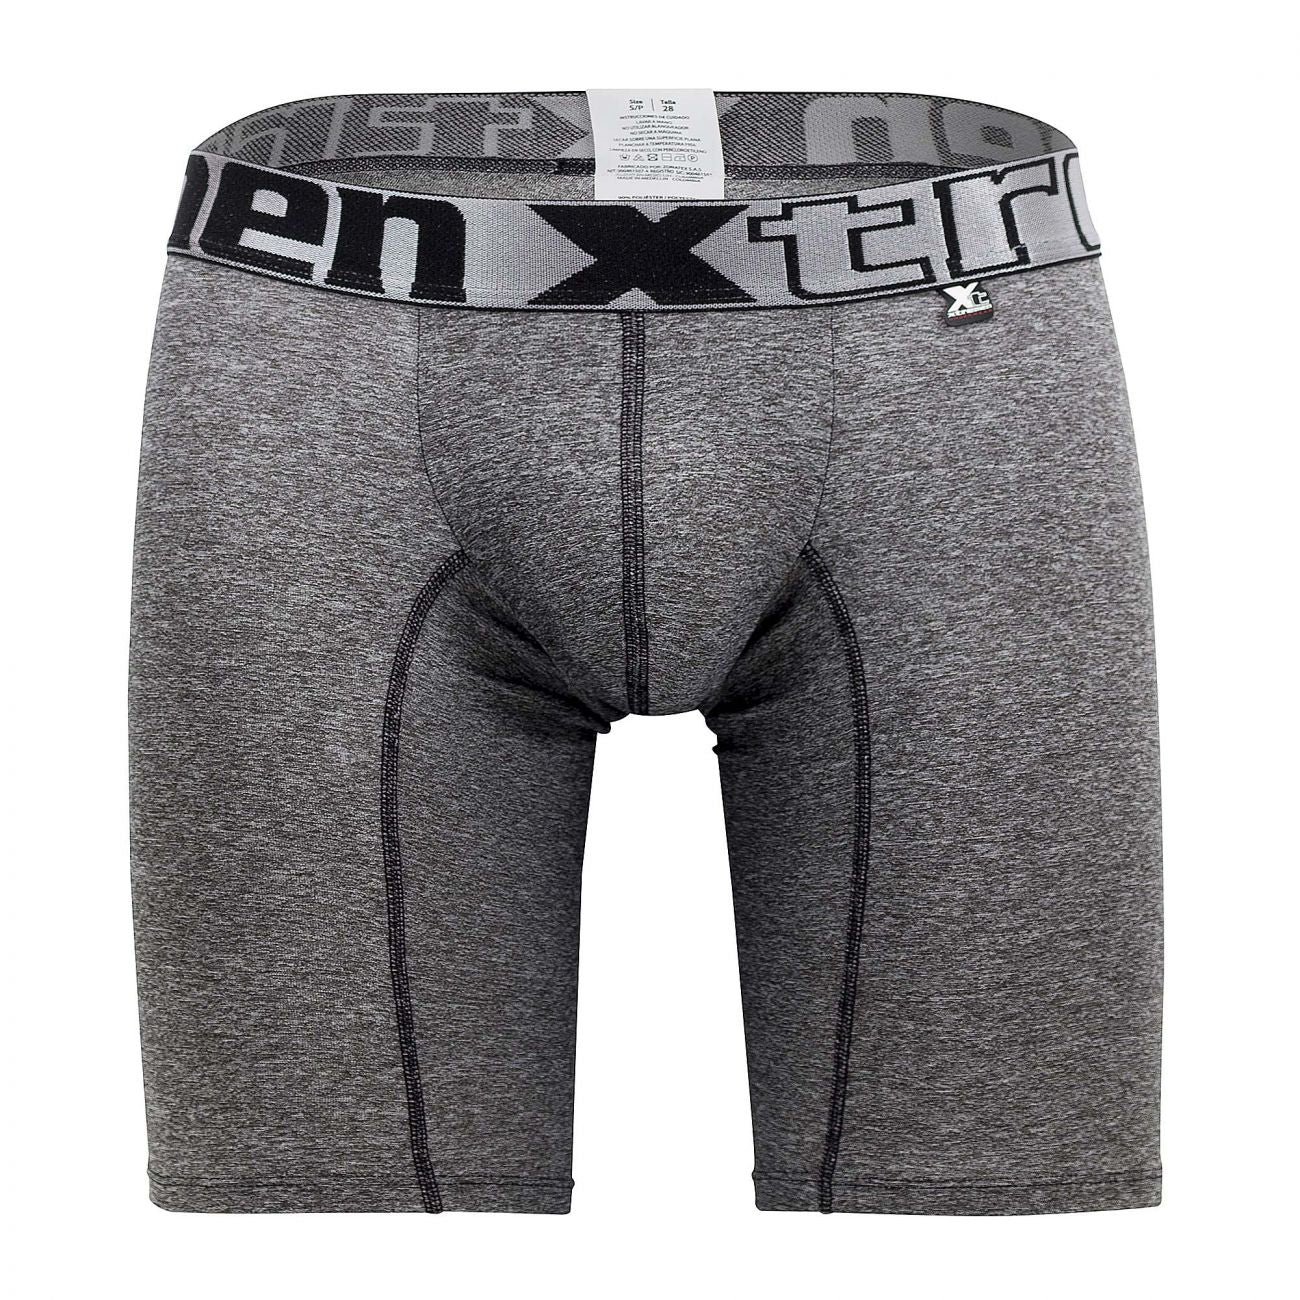 Xtremen 51485 Microfiber Athletic Boxer Briefs Black